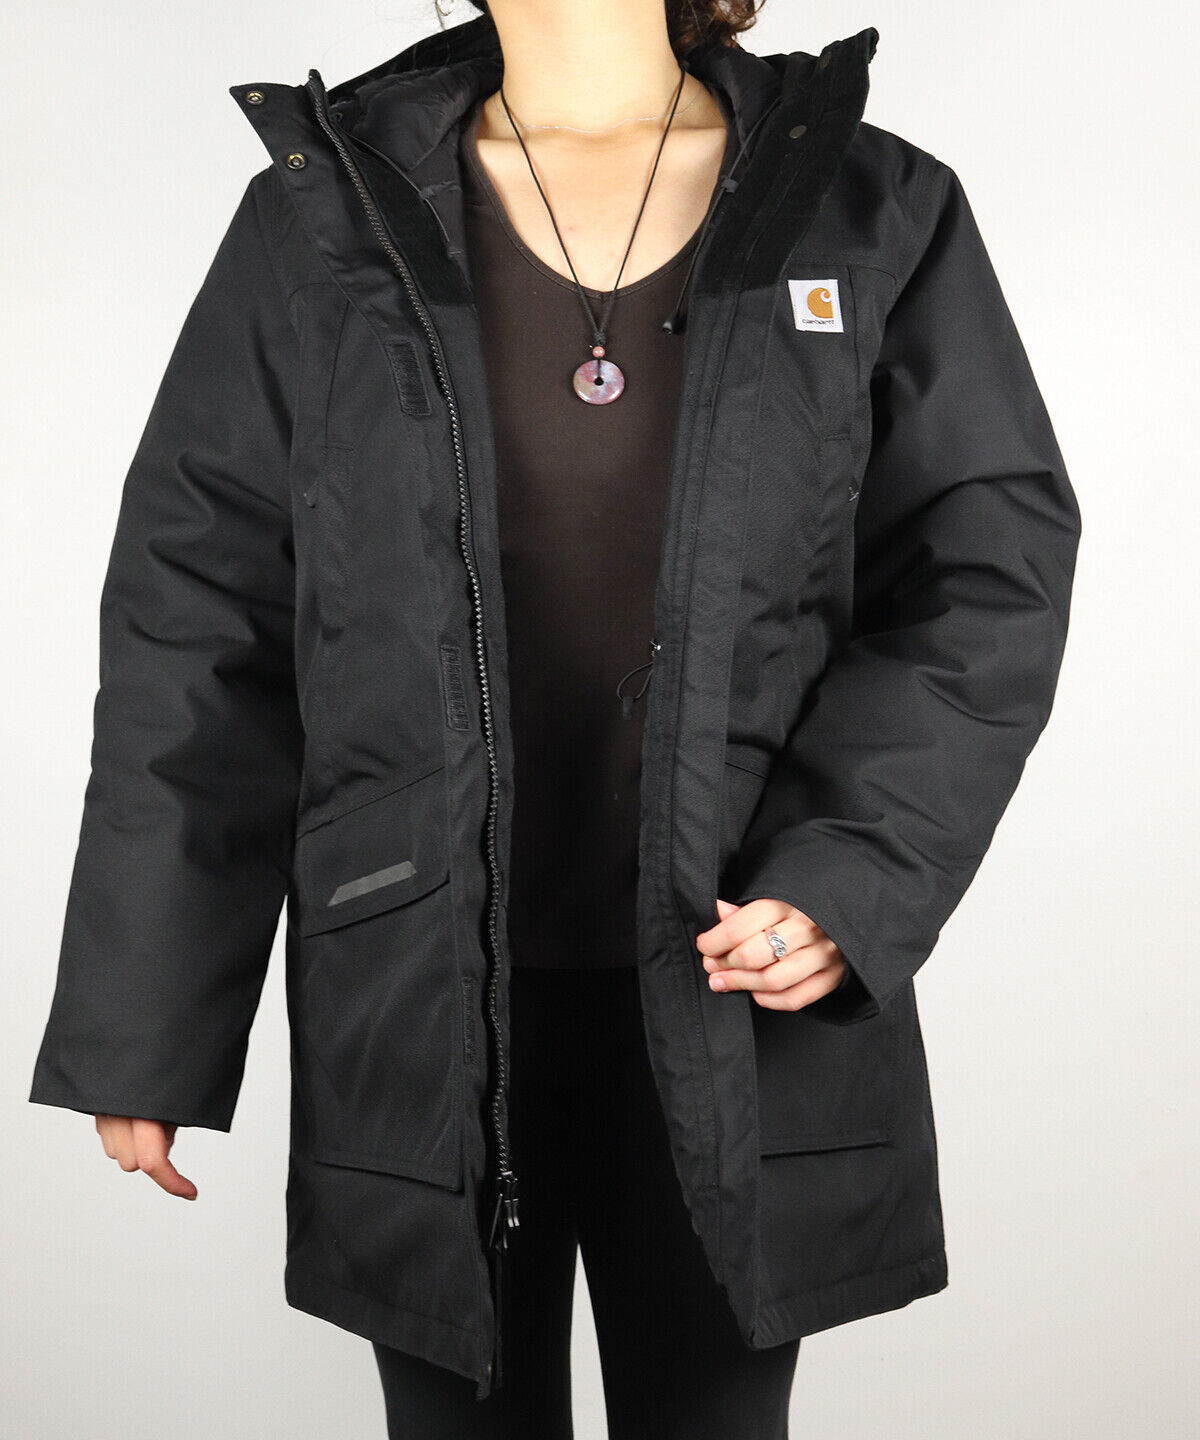 Carhartt Women's Black Yukon Extremes Full Swing Insulated Hooded Coat